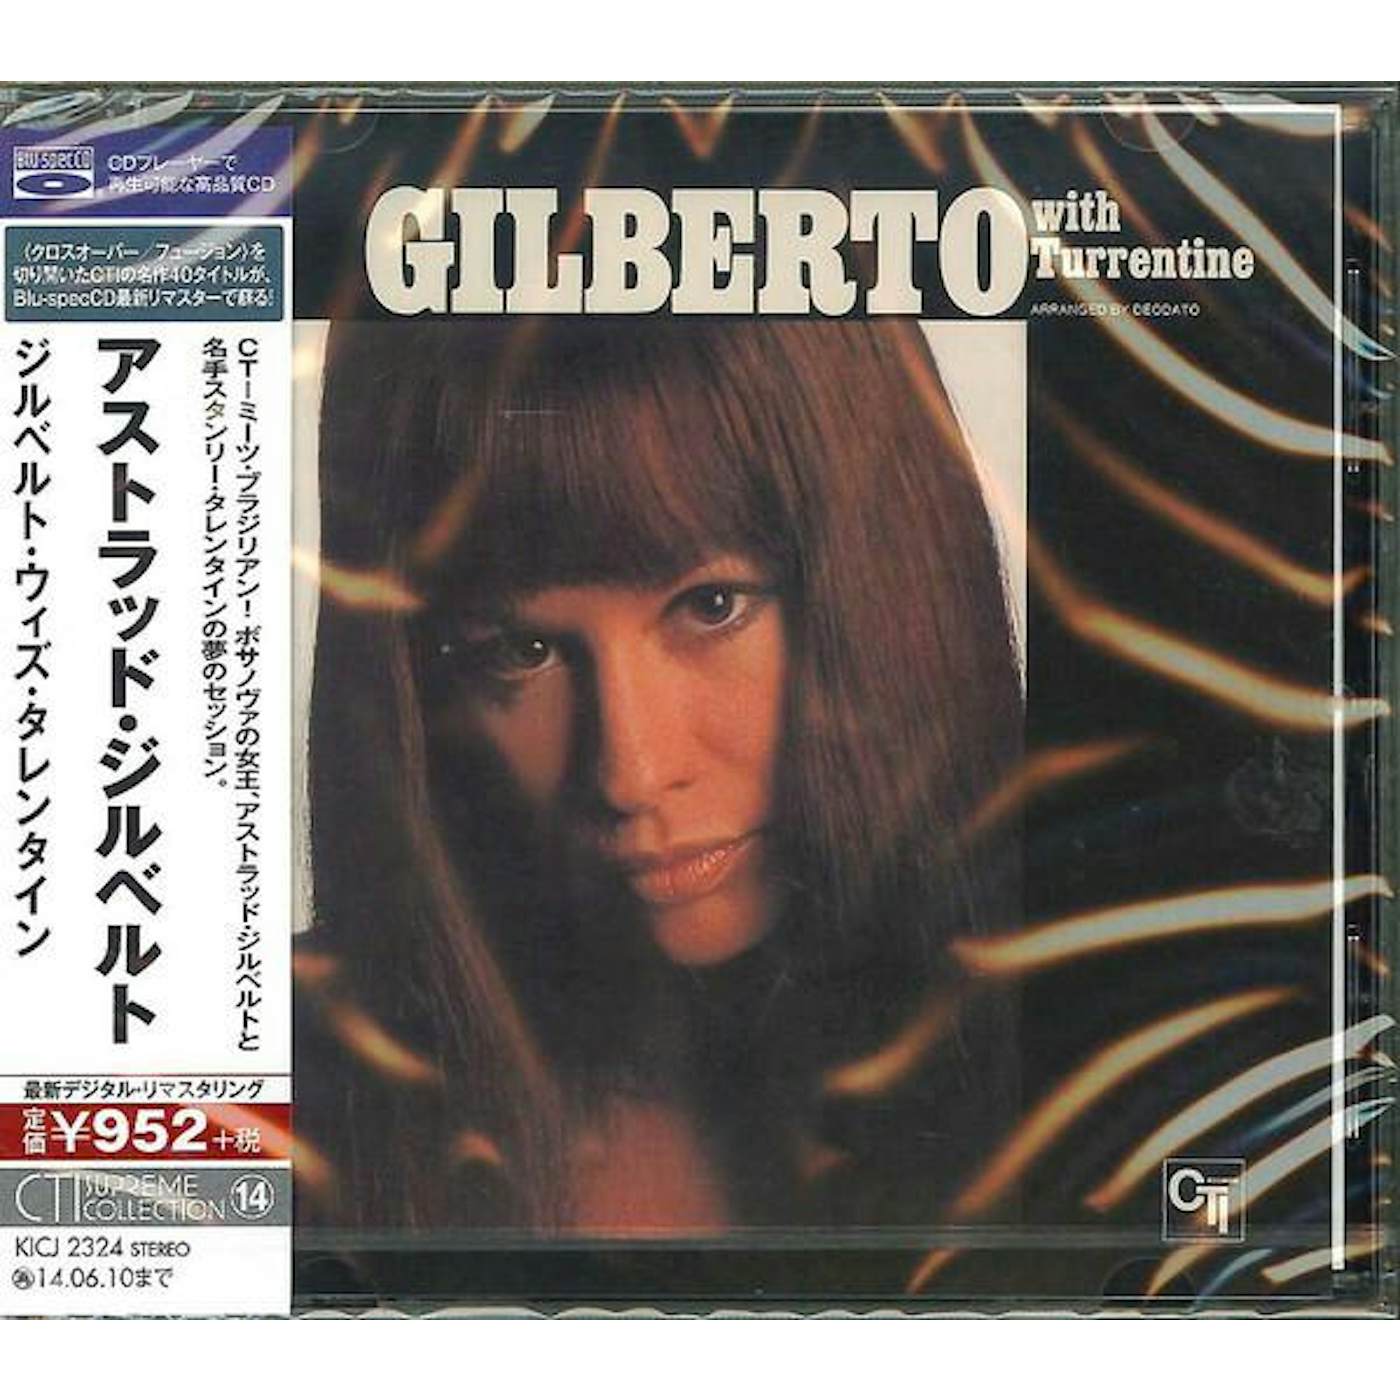 Astrud Gilberto GILBERTO WITH TURRENTINE CD